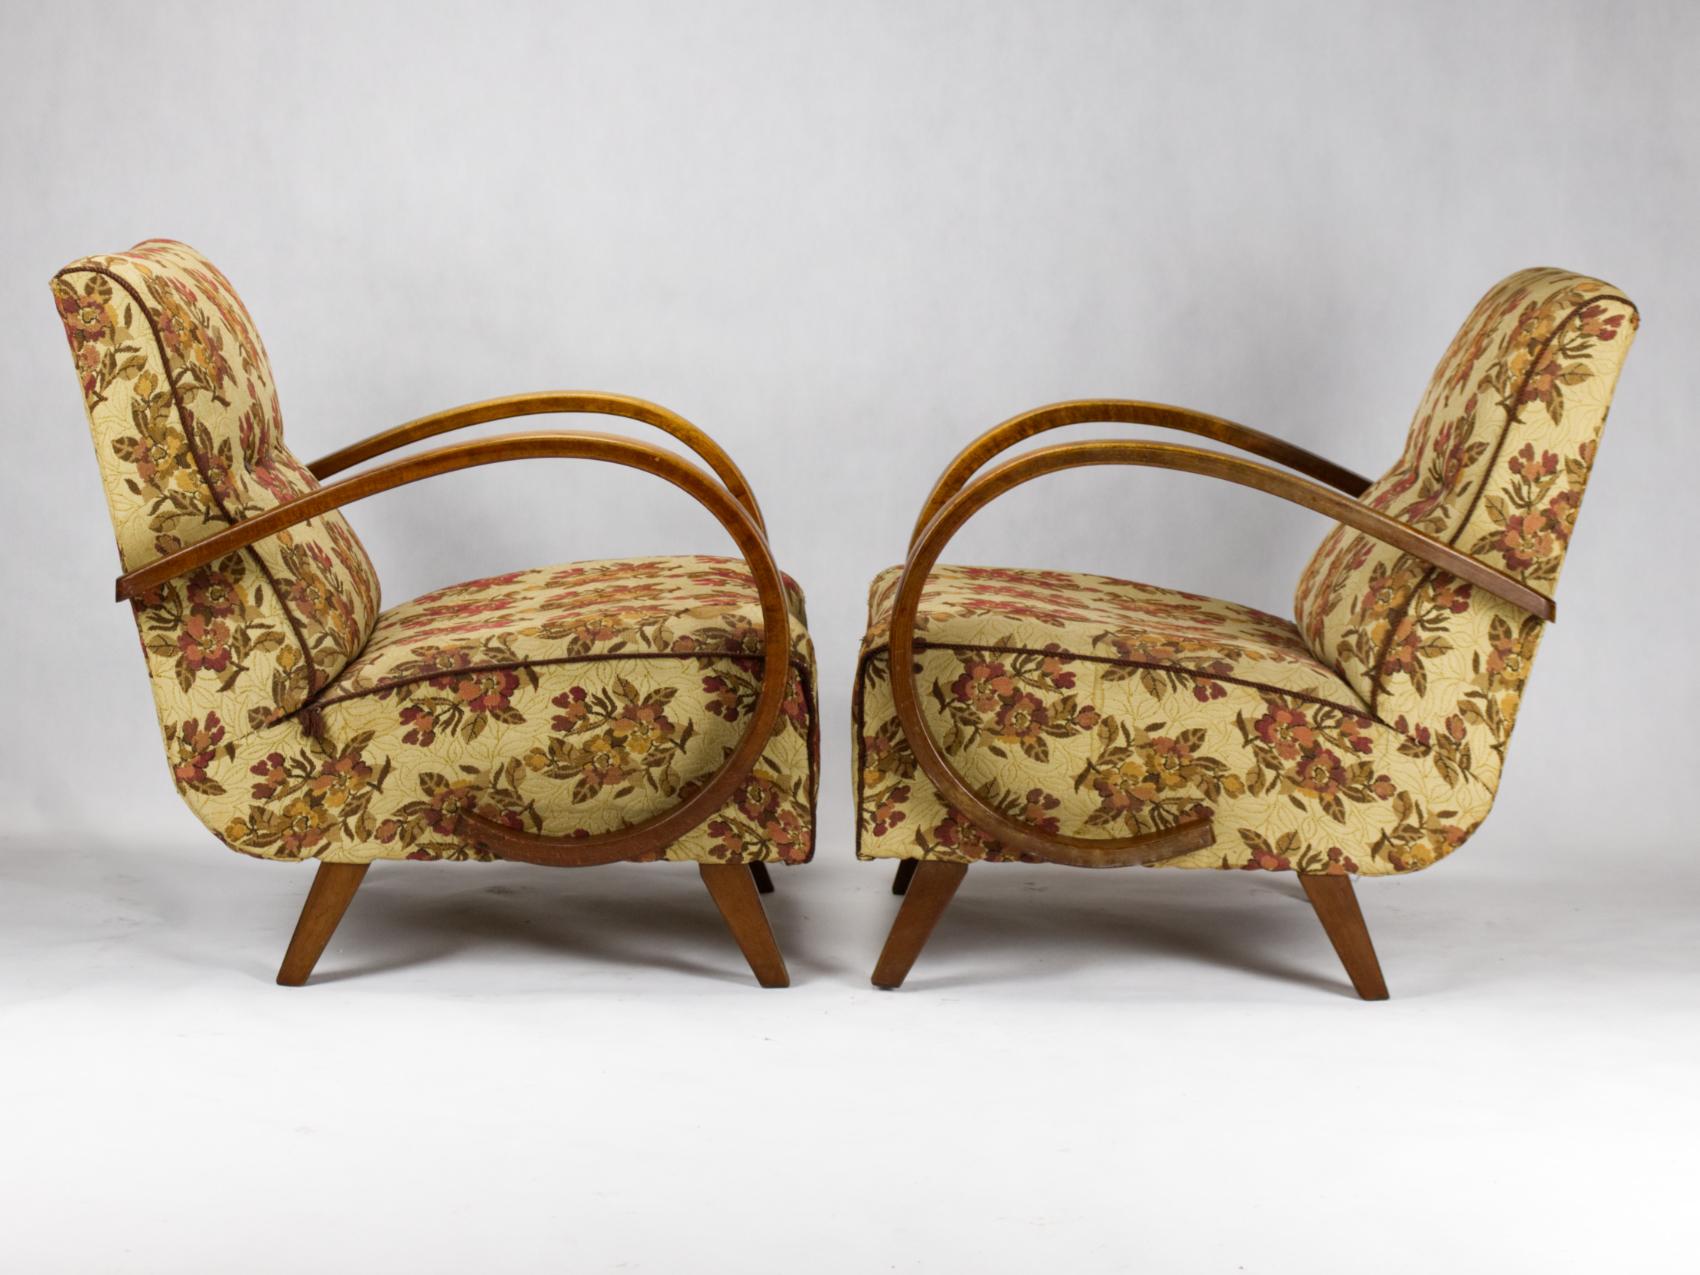 Czech Art Deco Lounge Chairs by Jindrich Halabala for UP Zavody Brno, 1930s